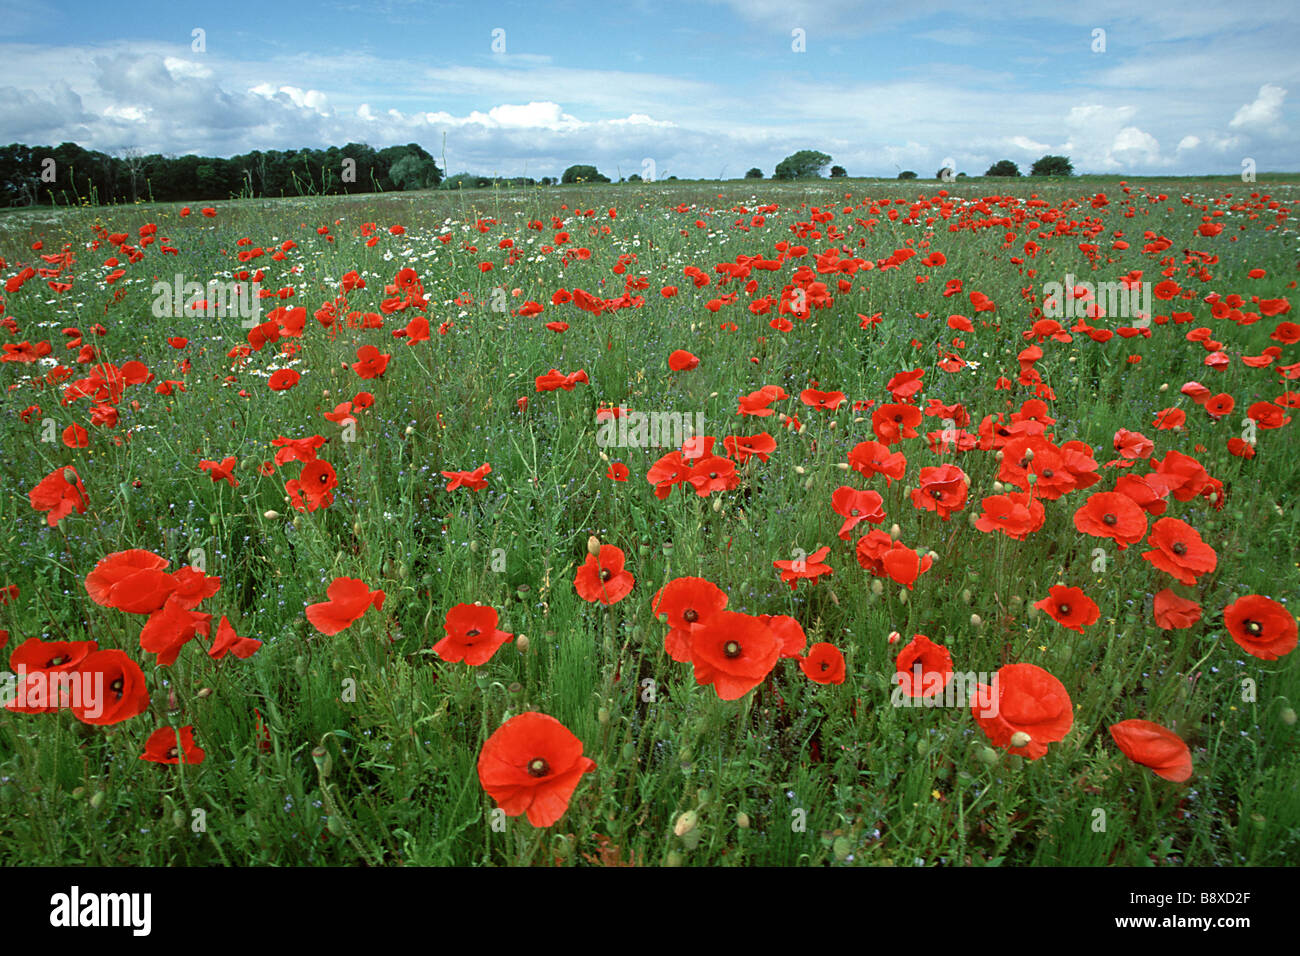 Common Poppy (Papaver rhoeas), en masse on arable farm land (set aside) Stock Photo